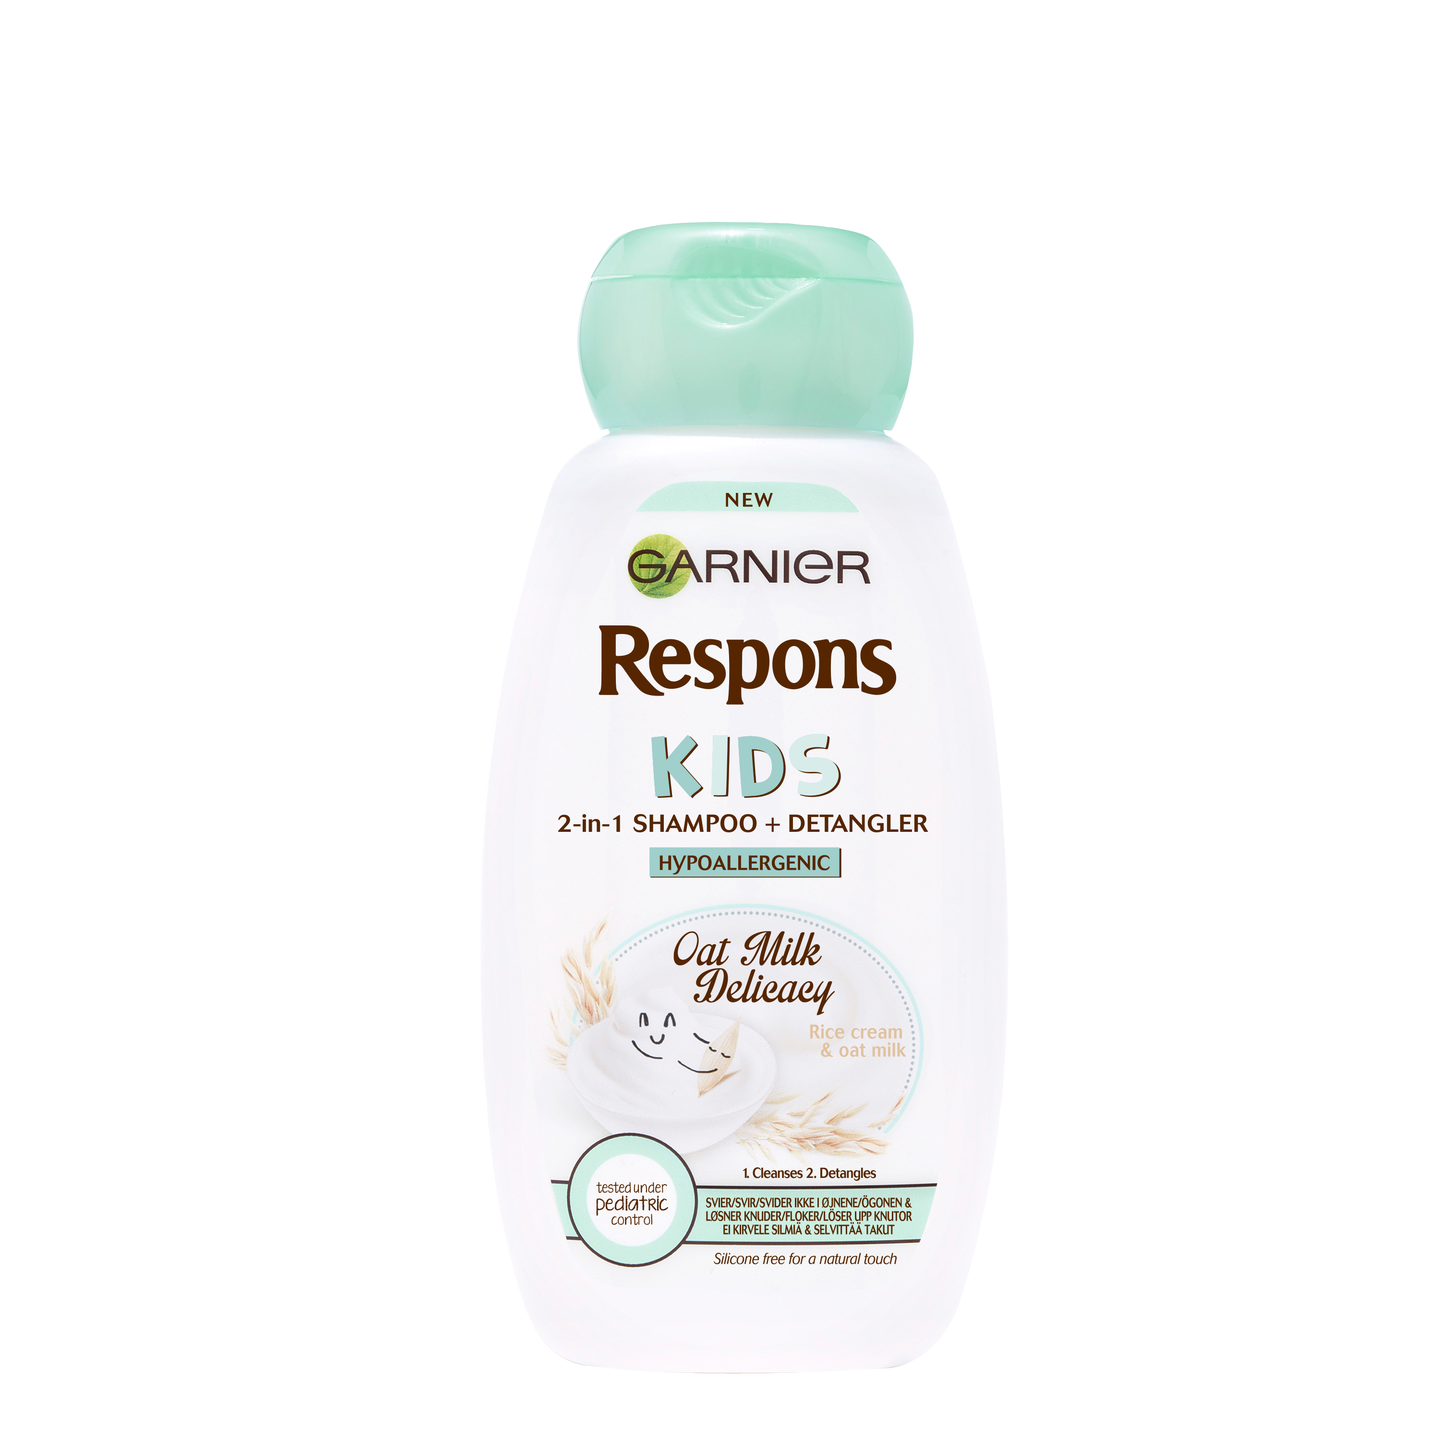 Garnier Respons Kids lastenshampoo 250ml 2in1 Oat Milk Delicacy